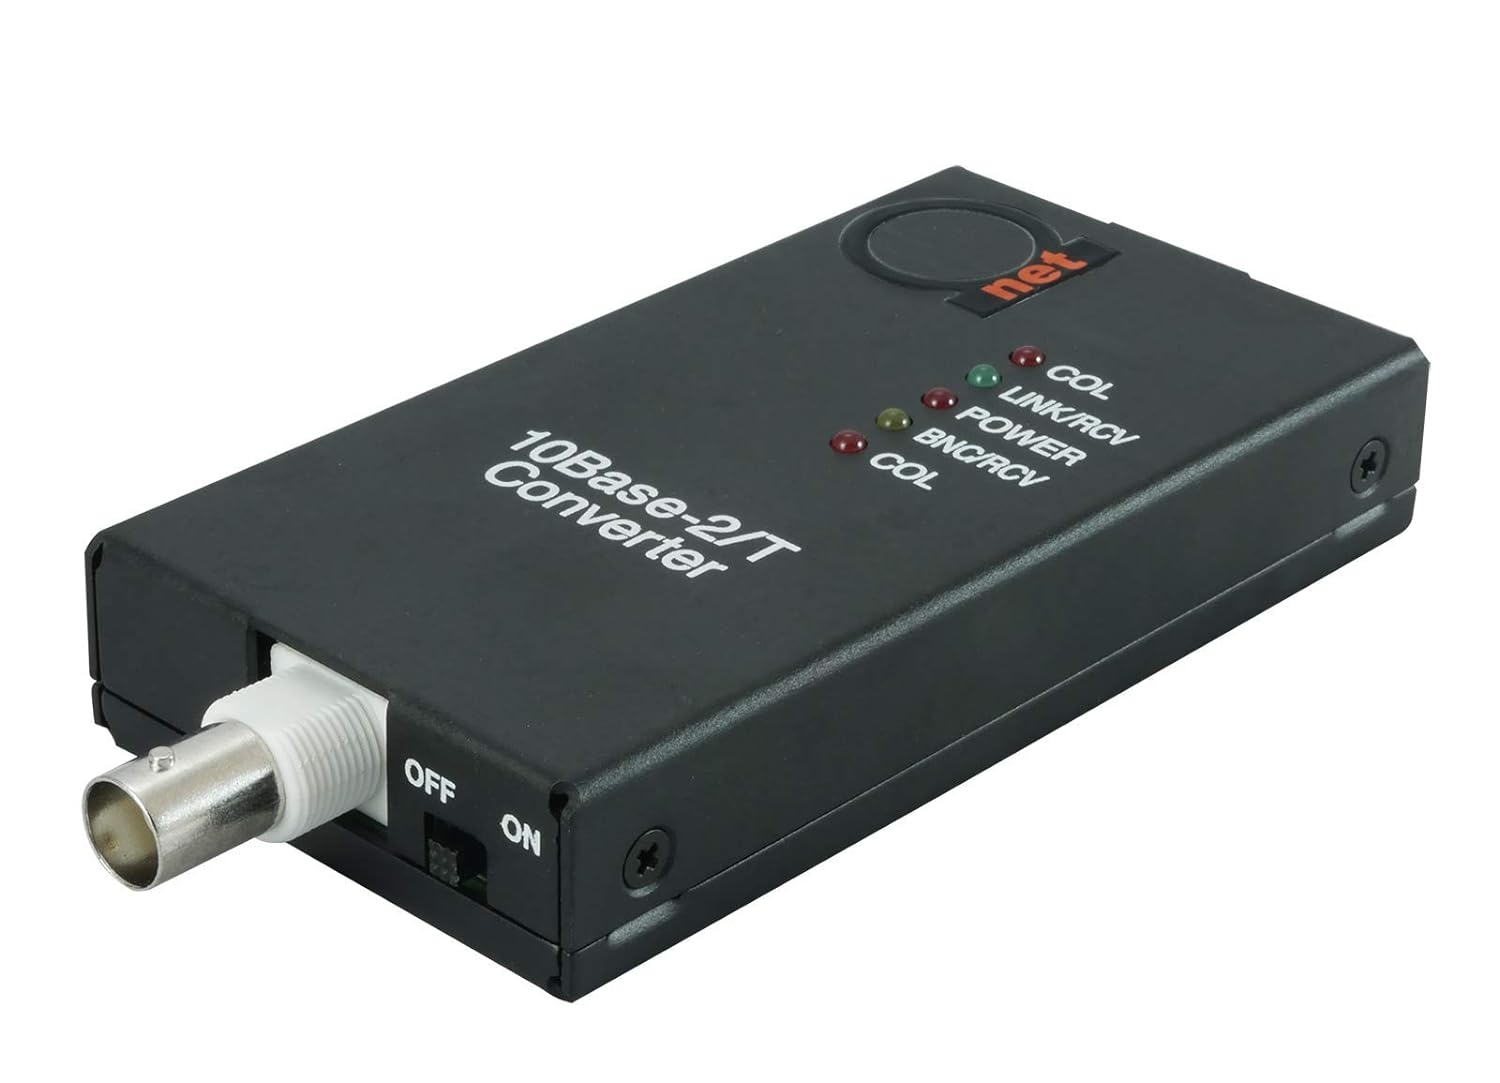 ADNET 10Baset Rj45 UTP To 10Base2 BNC Coax Media Converter | 10Base-T/2 Ethernet Adapter